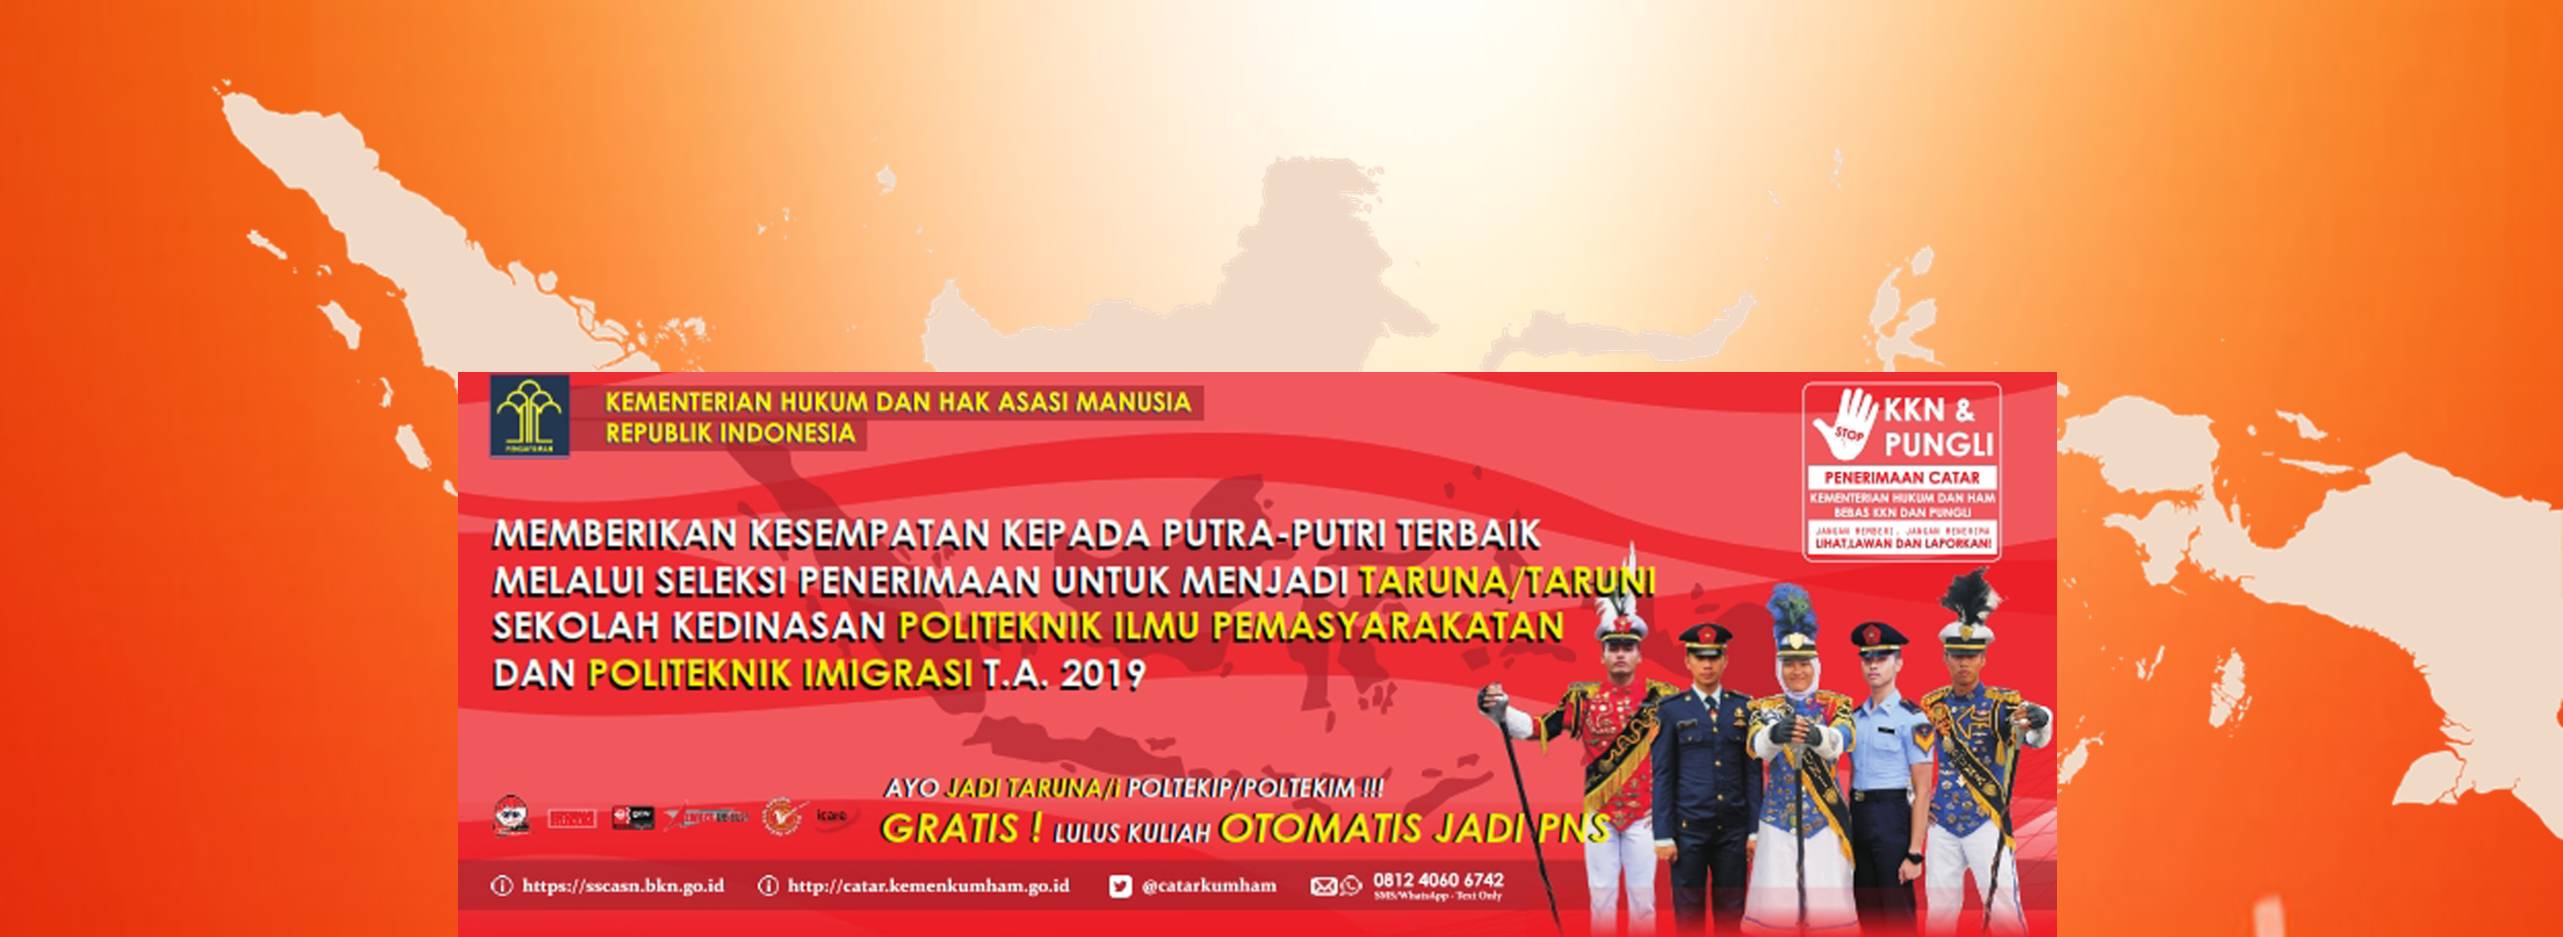 Kantor Wilayah Kementerian Hukum dan Hak Asasi Manusia Daerah Istimewa Yogyakarta